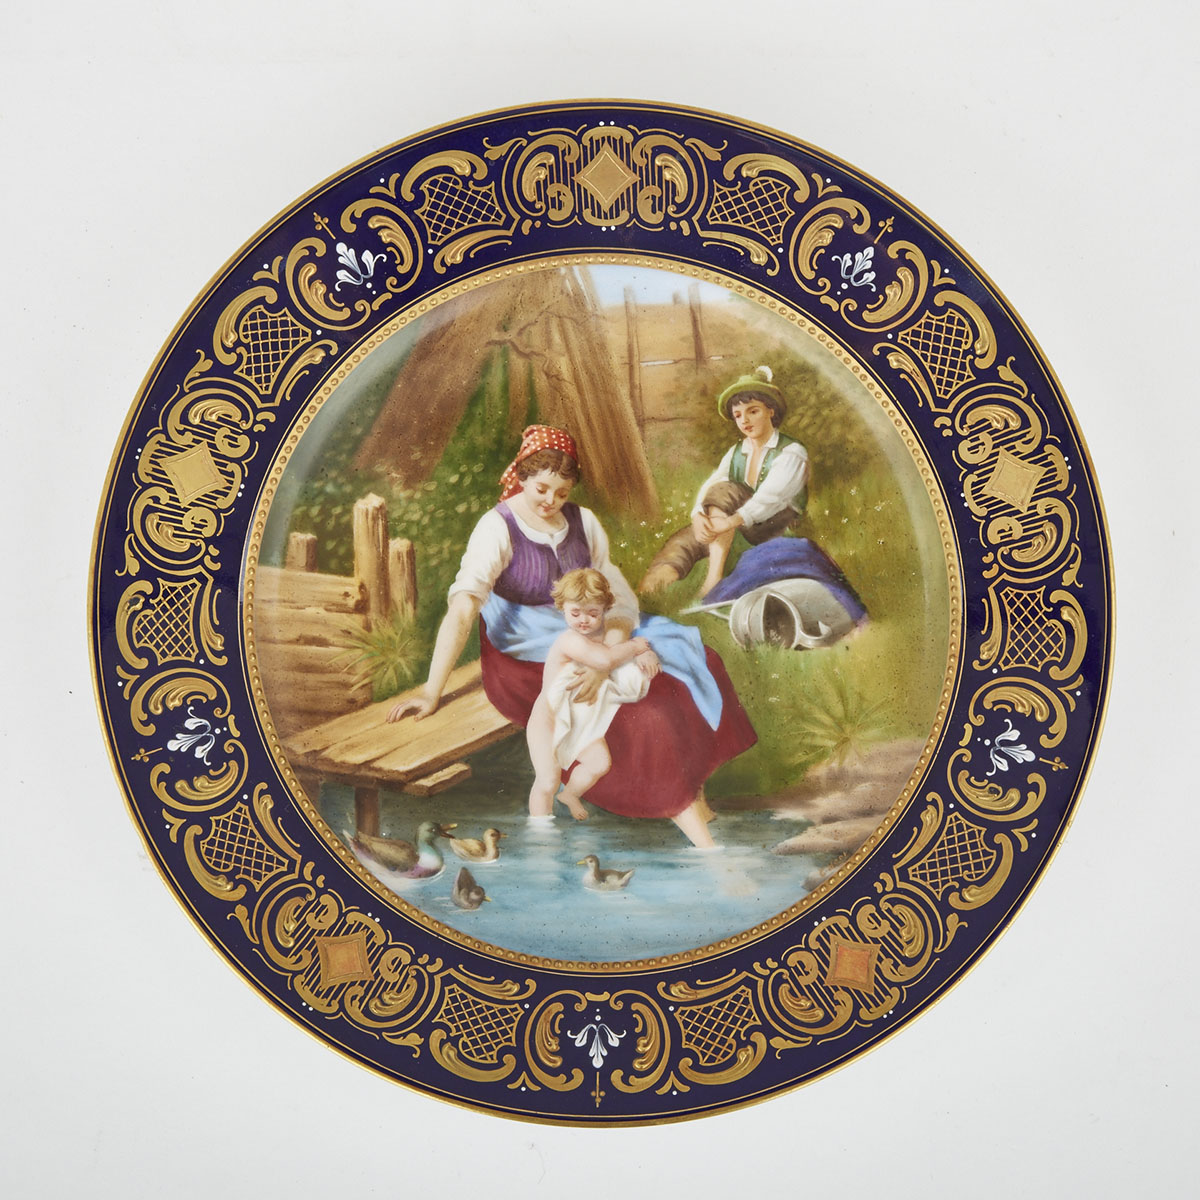 ‘Vienna’ Cabinet Plate, ‘Der Hasenfufs’, early 20th century